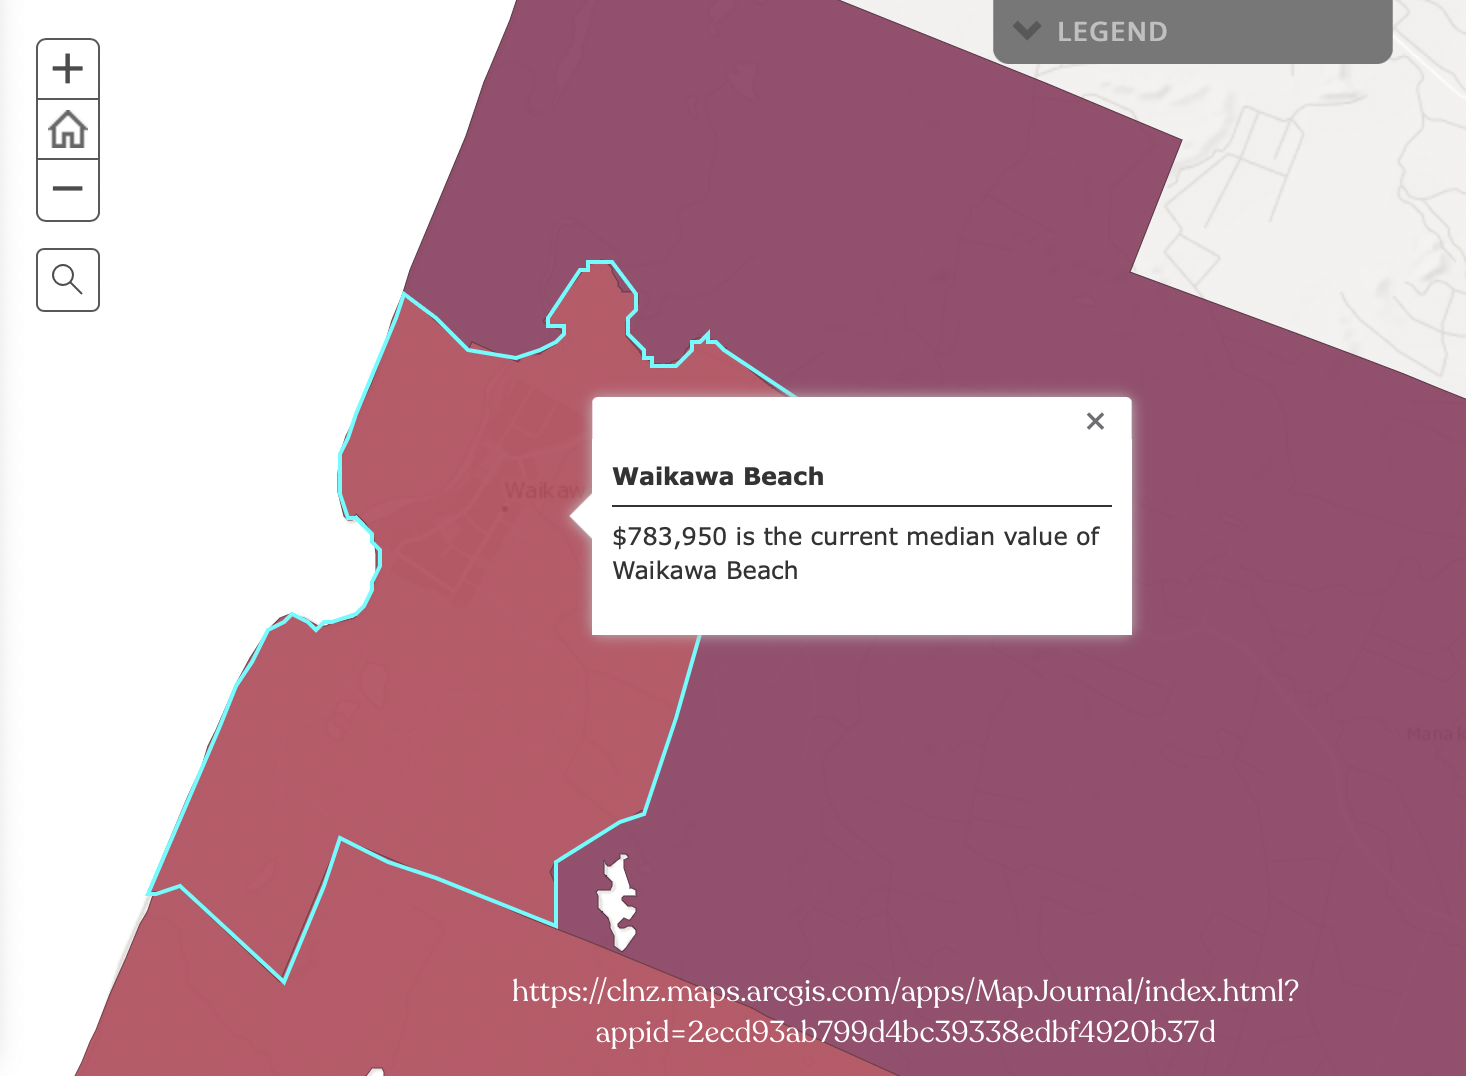 Screenshot of map with Waikawa Beach median house price shown. 